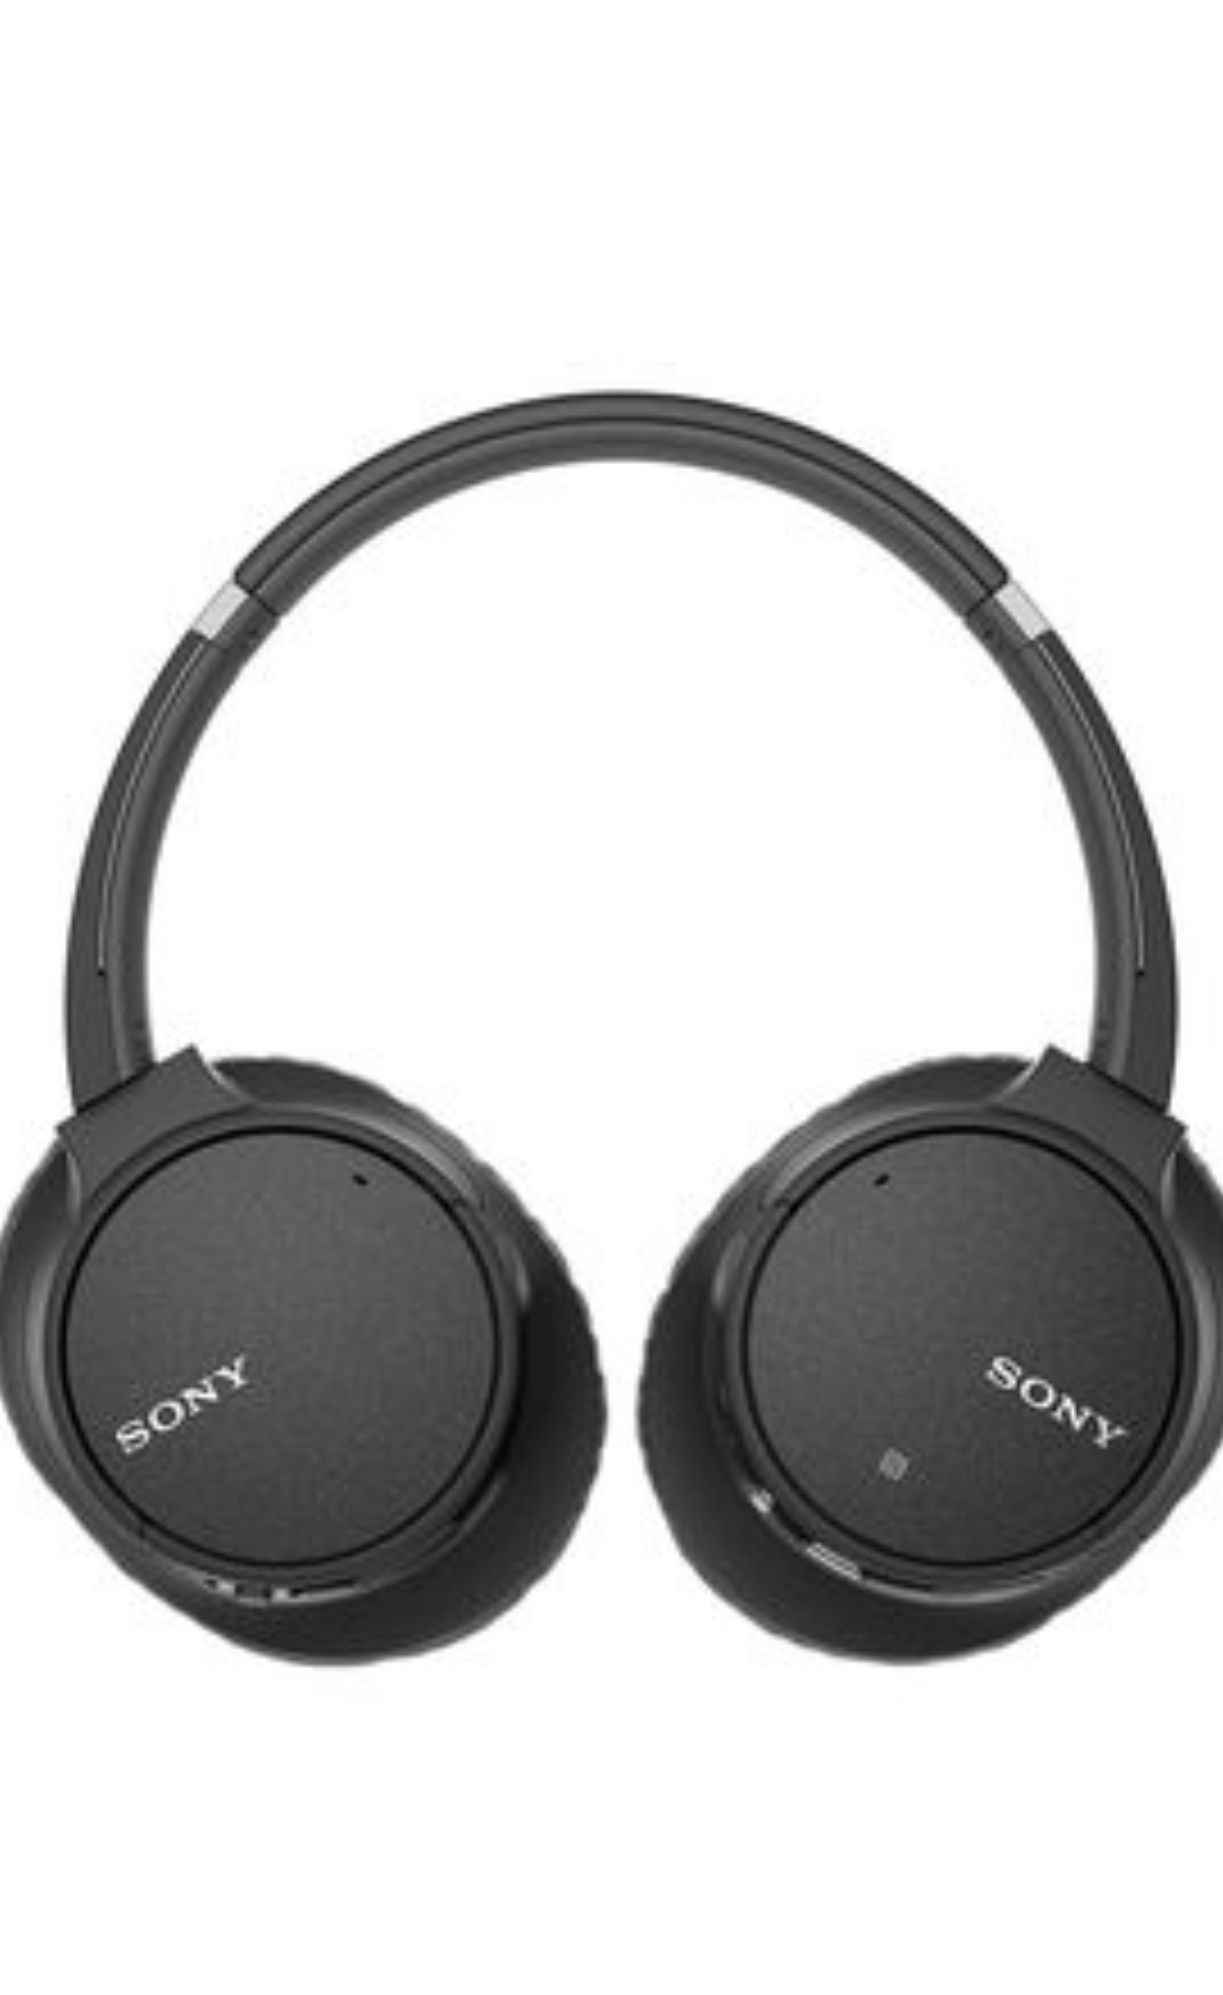 SONY Wireless Noise Canceling Headphones (send offers, NOT $1) 